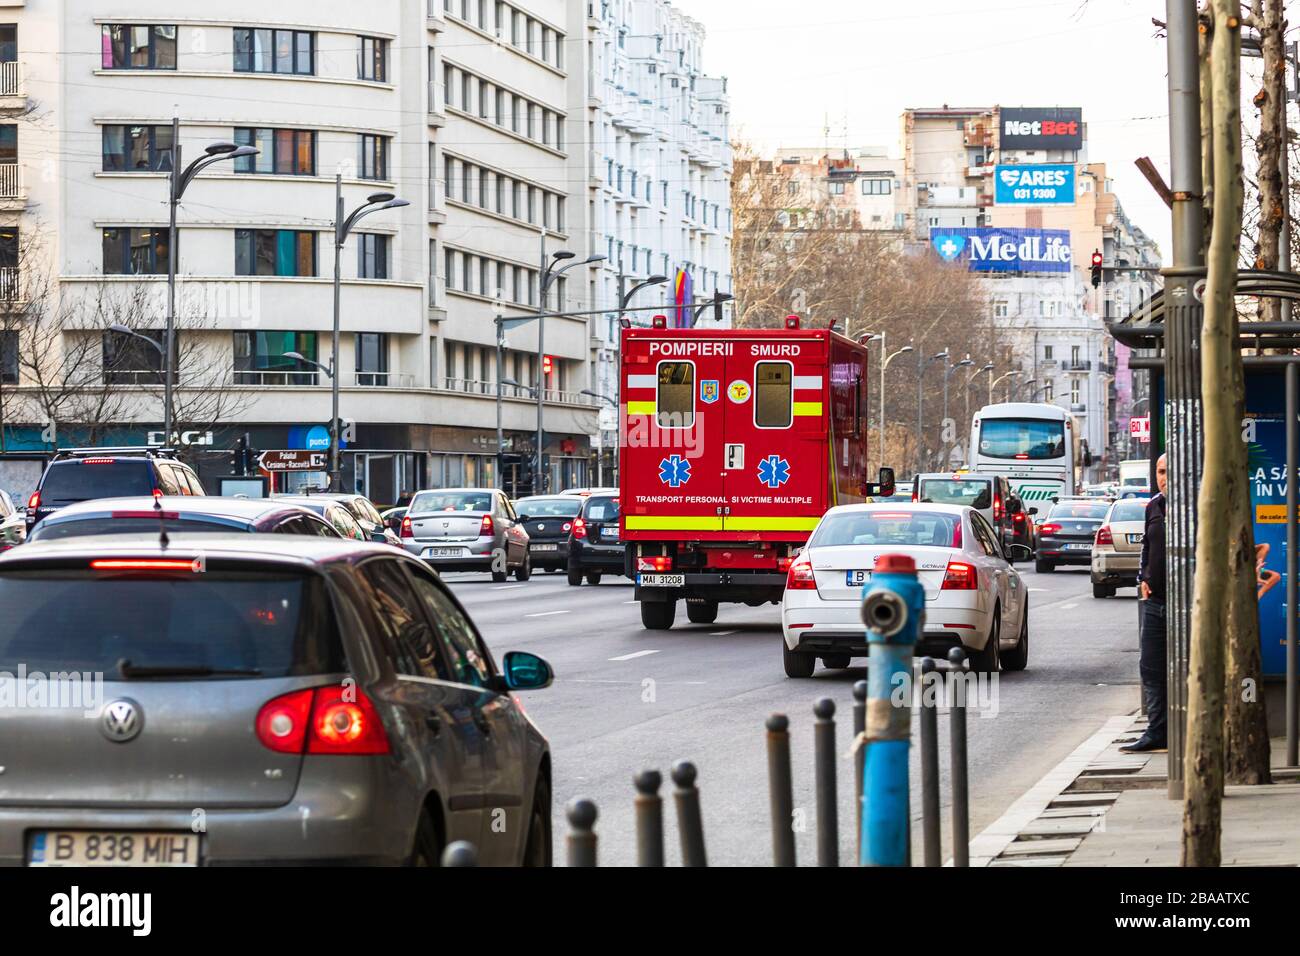 Romanian SMURD ambulance car, 911 or 112 emergency medical service in mission in downtown Bucharest, Romania, 2020. Coronavirus worldwide outbreak cri Stock Photo